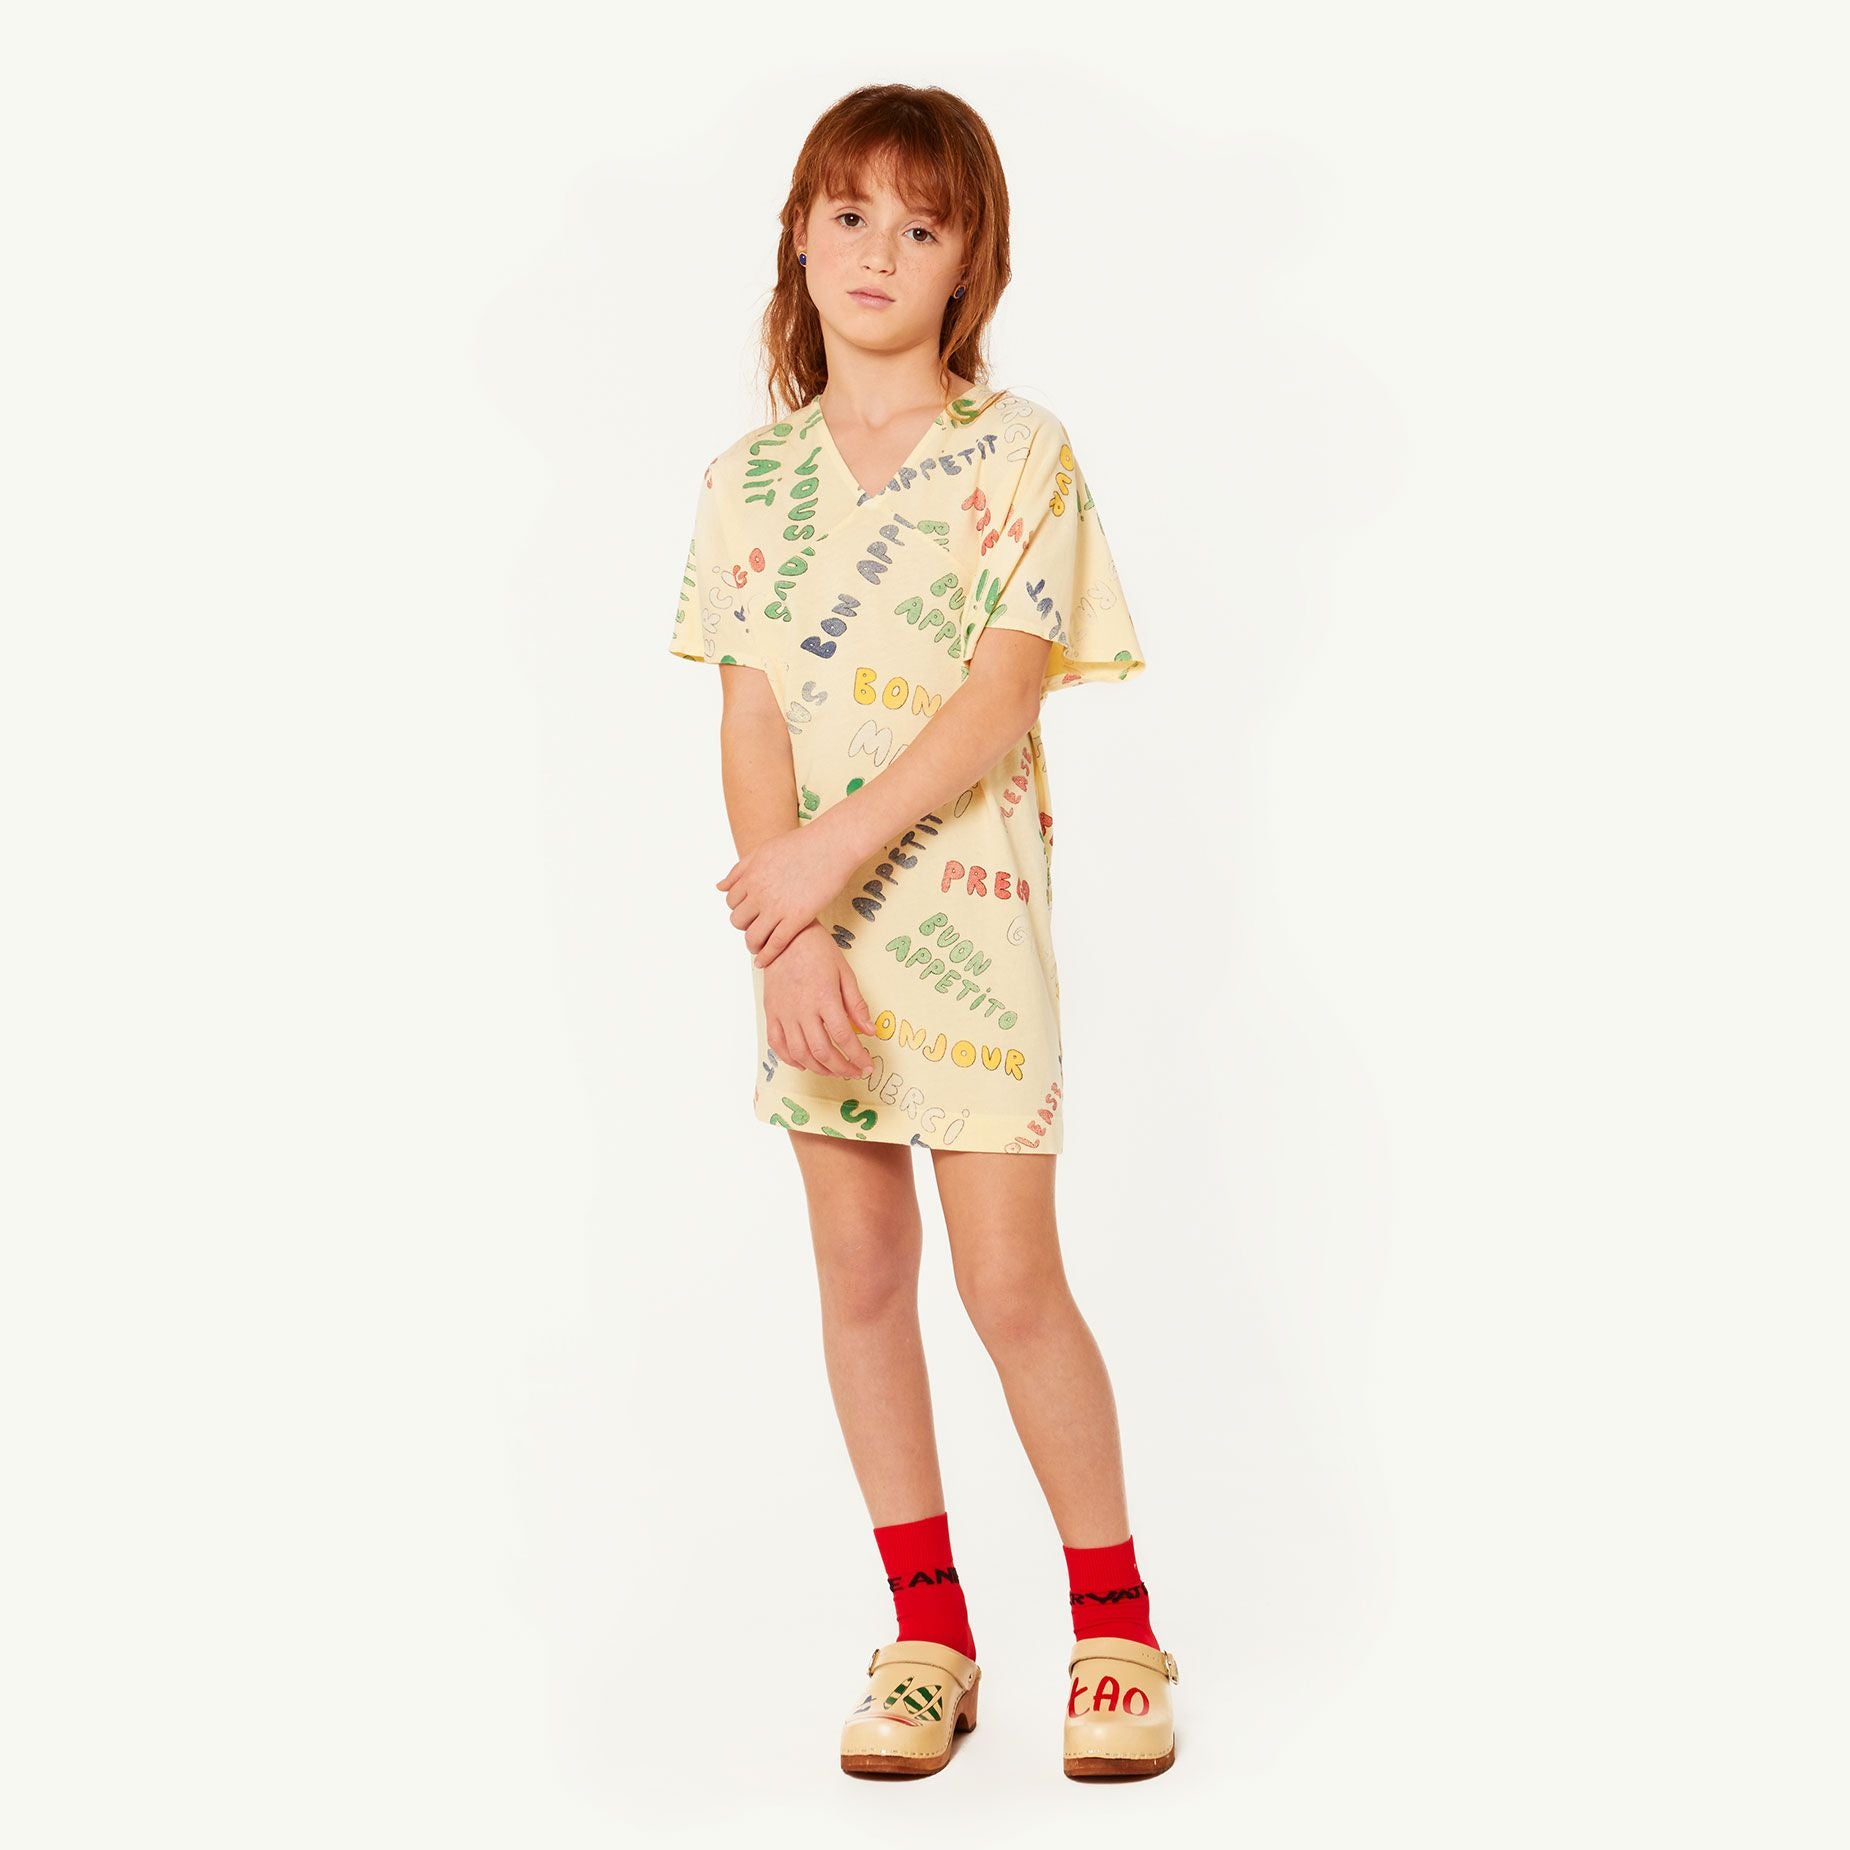 DRAGON KIDS DRESS, YELLOW WORDS - Cemarose Children's Fashion Boutique